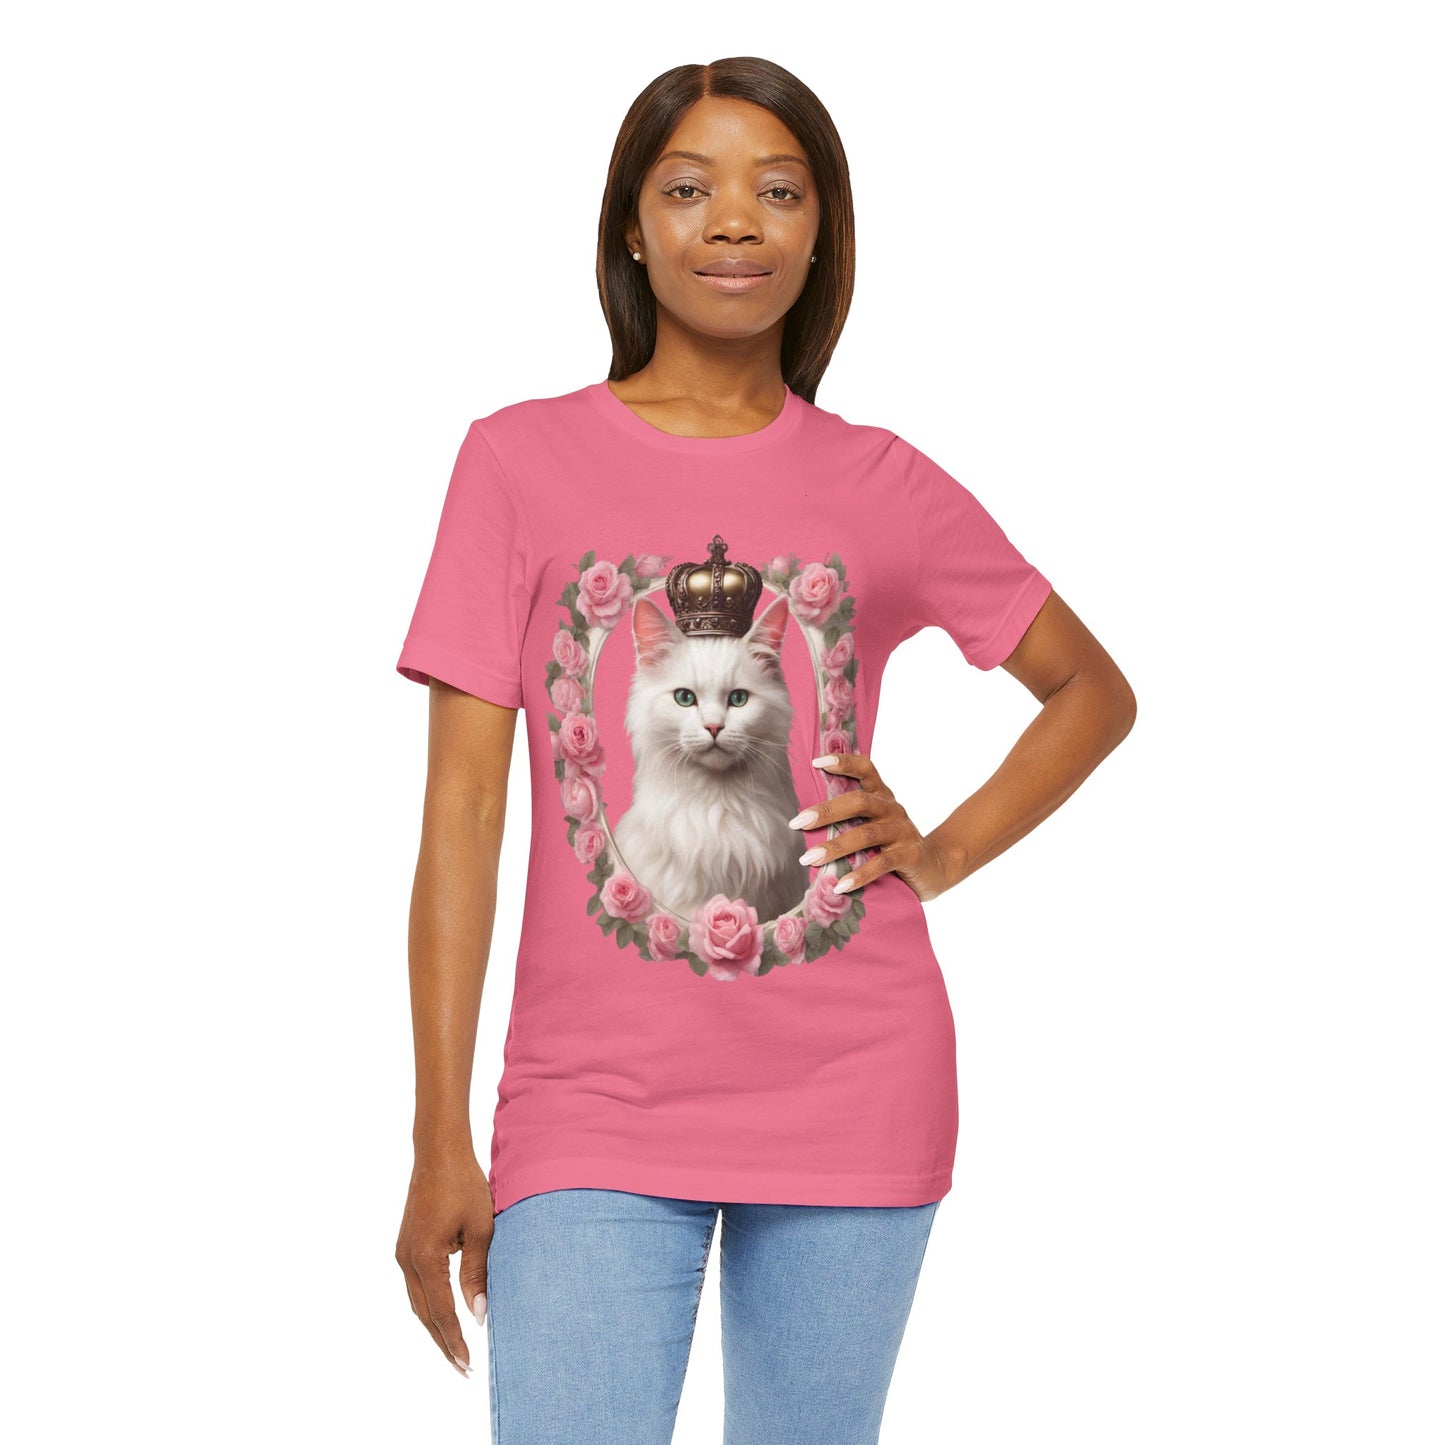 Coquette Kitty Cat Princess Women's Jersey Short Sleeved Tee Size S-2xl